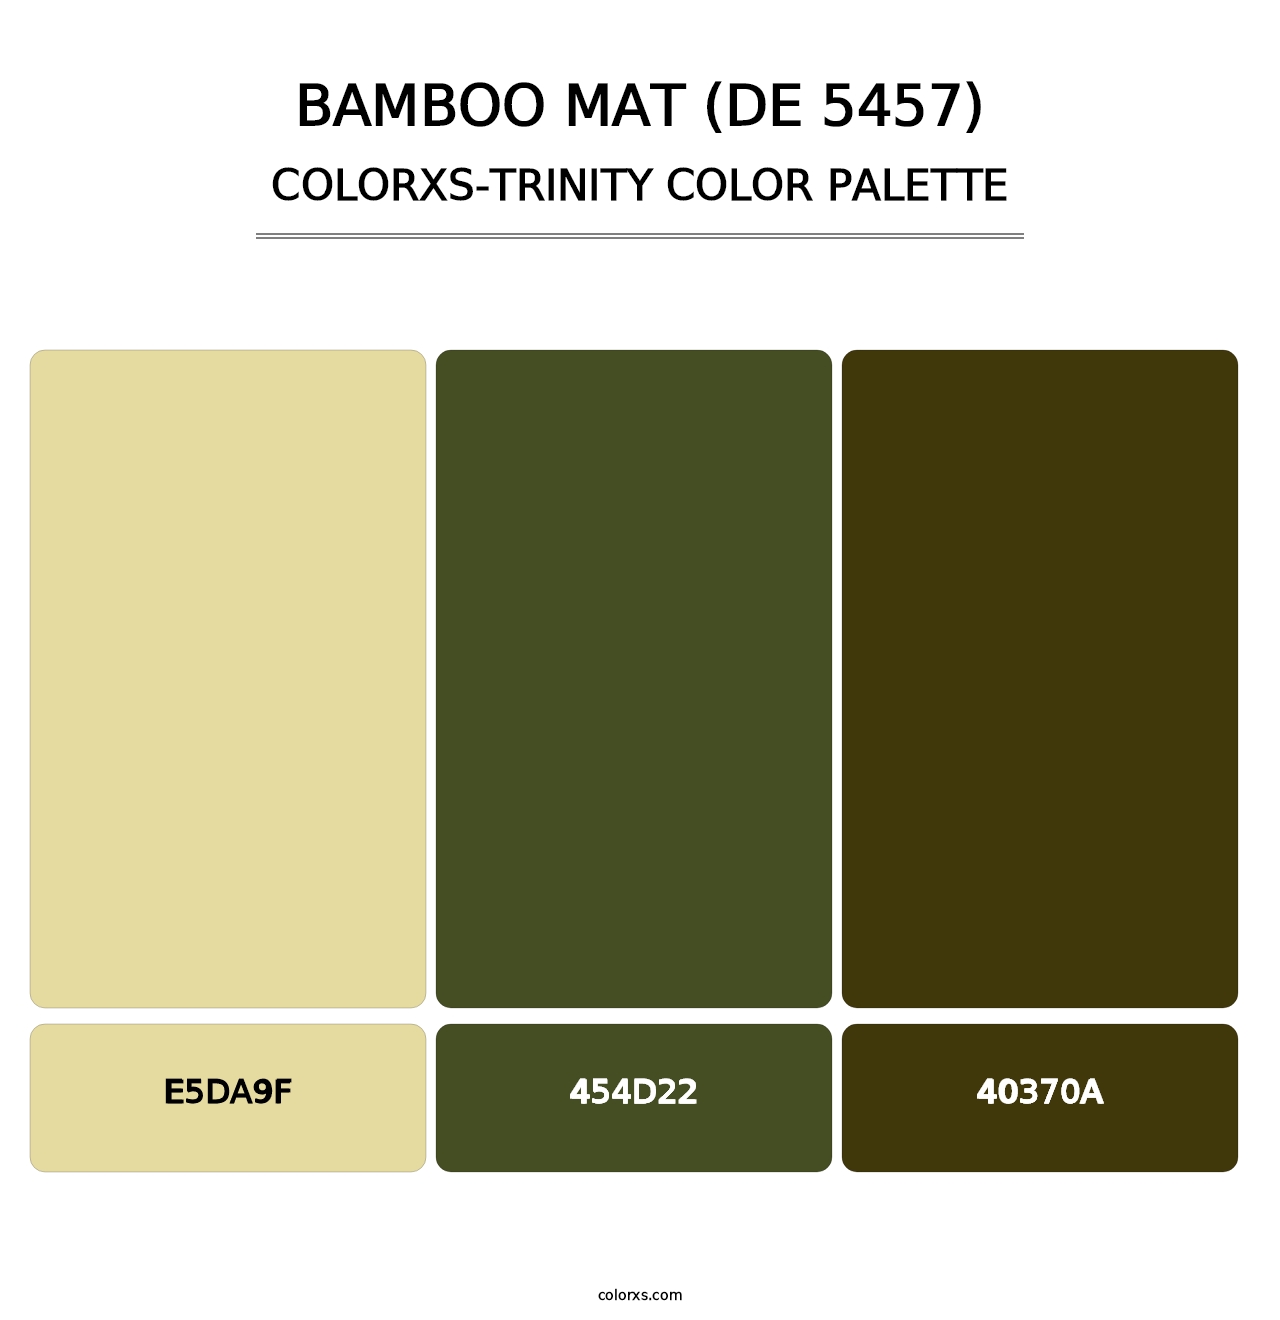 Bamboo Mat (DE 5457) - Colorxs Trinity Palette